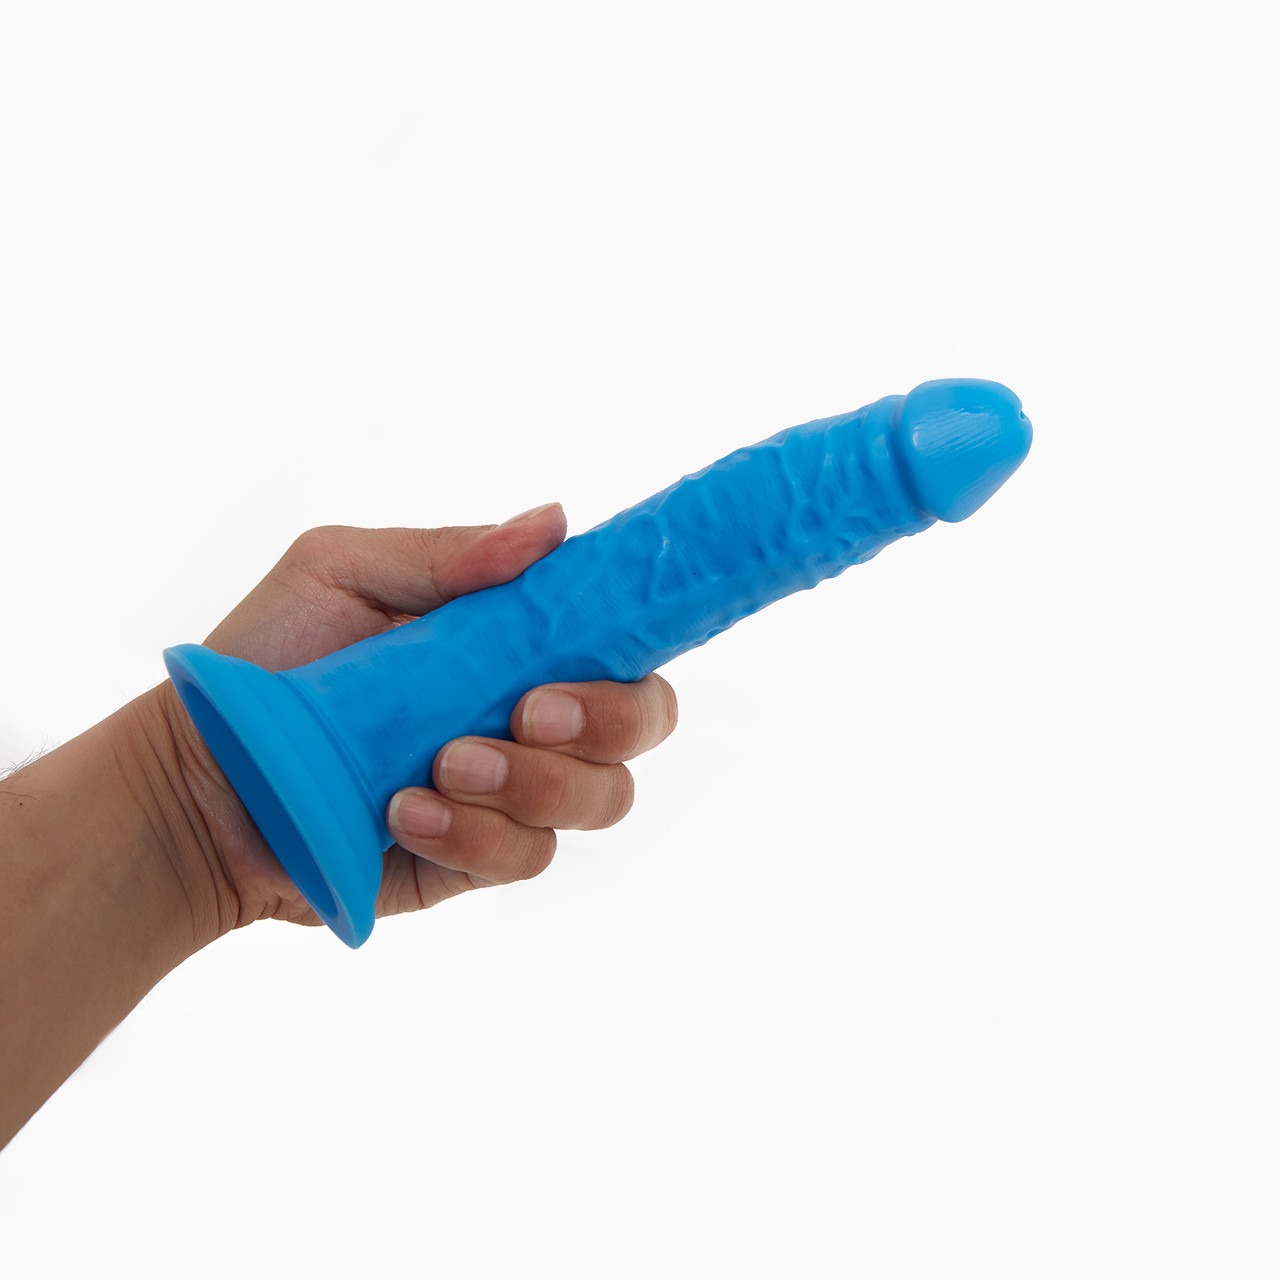 Neo Elite 7.5" Realistic strap- on Penis Dildo held in hand